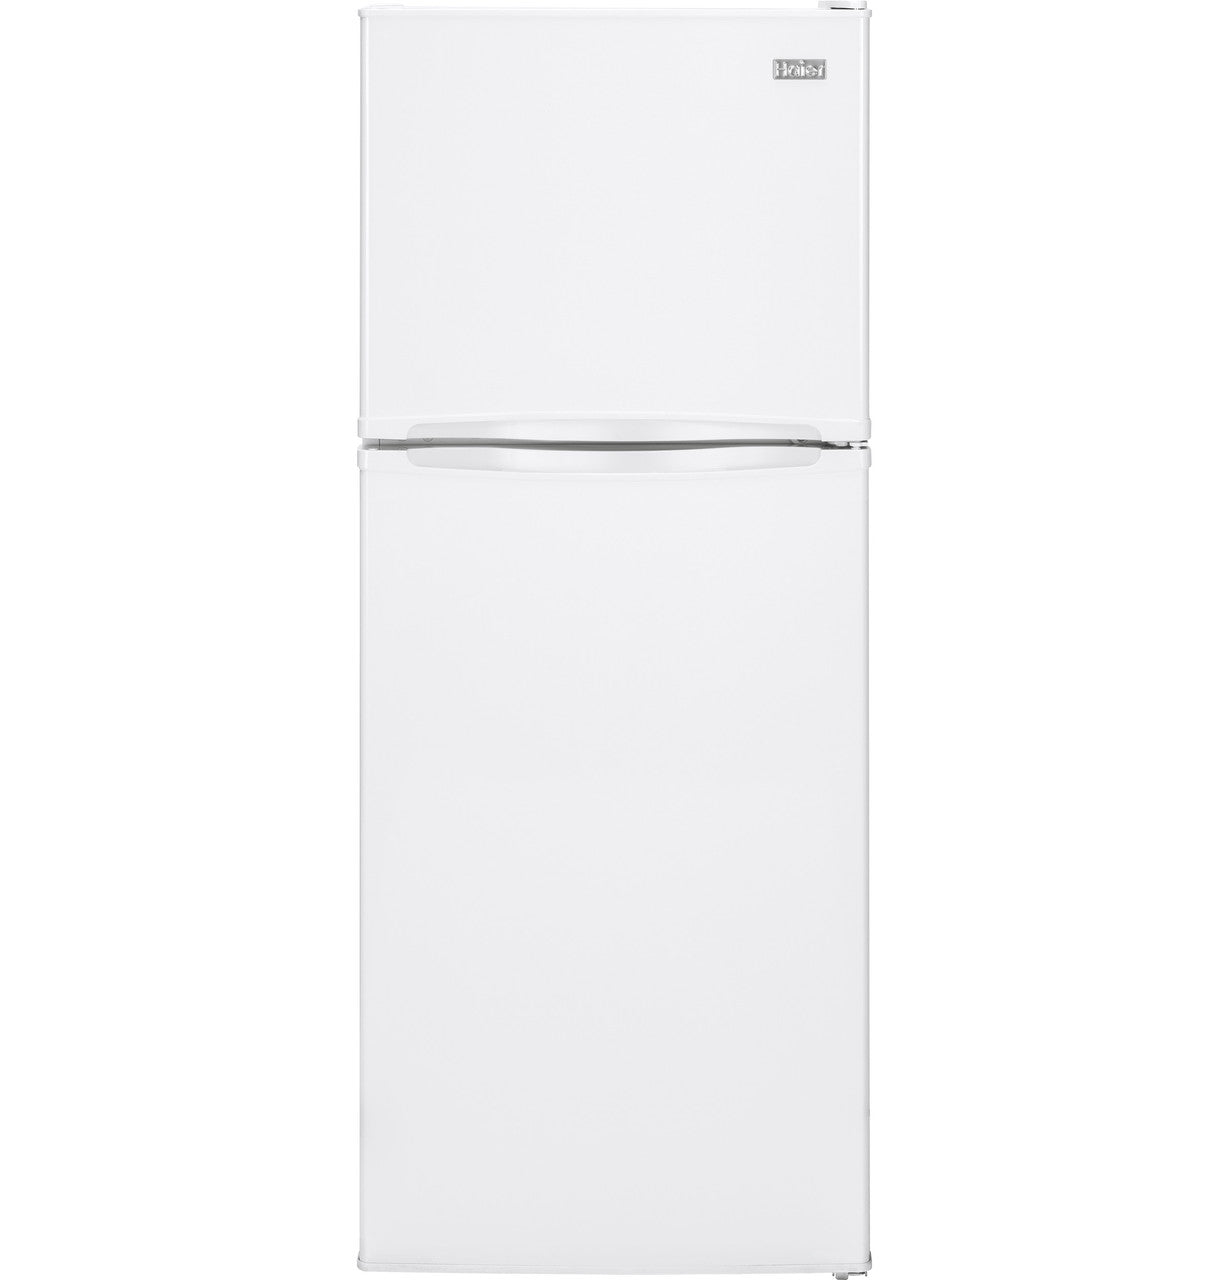 Haier 9.8 Cu. Ft. Top Freezer Refrigerator | White (HA10TG21SW) +